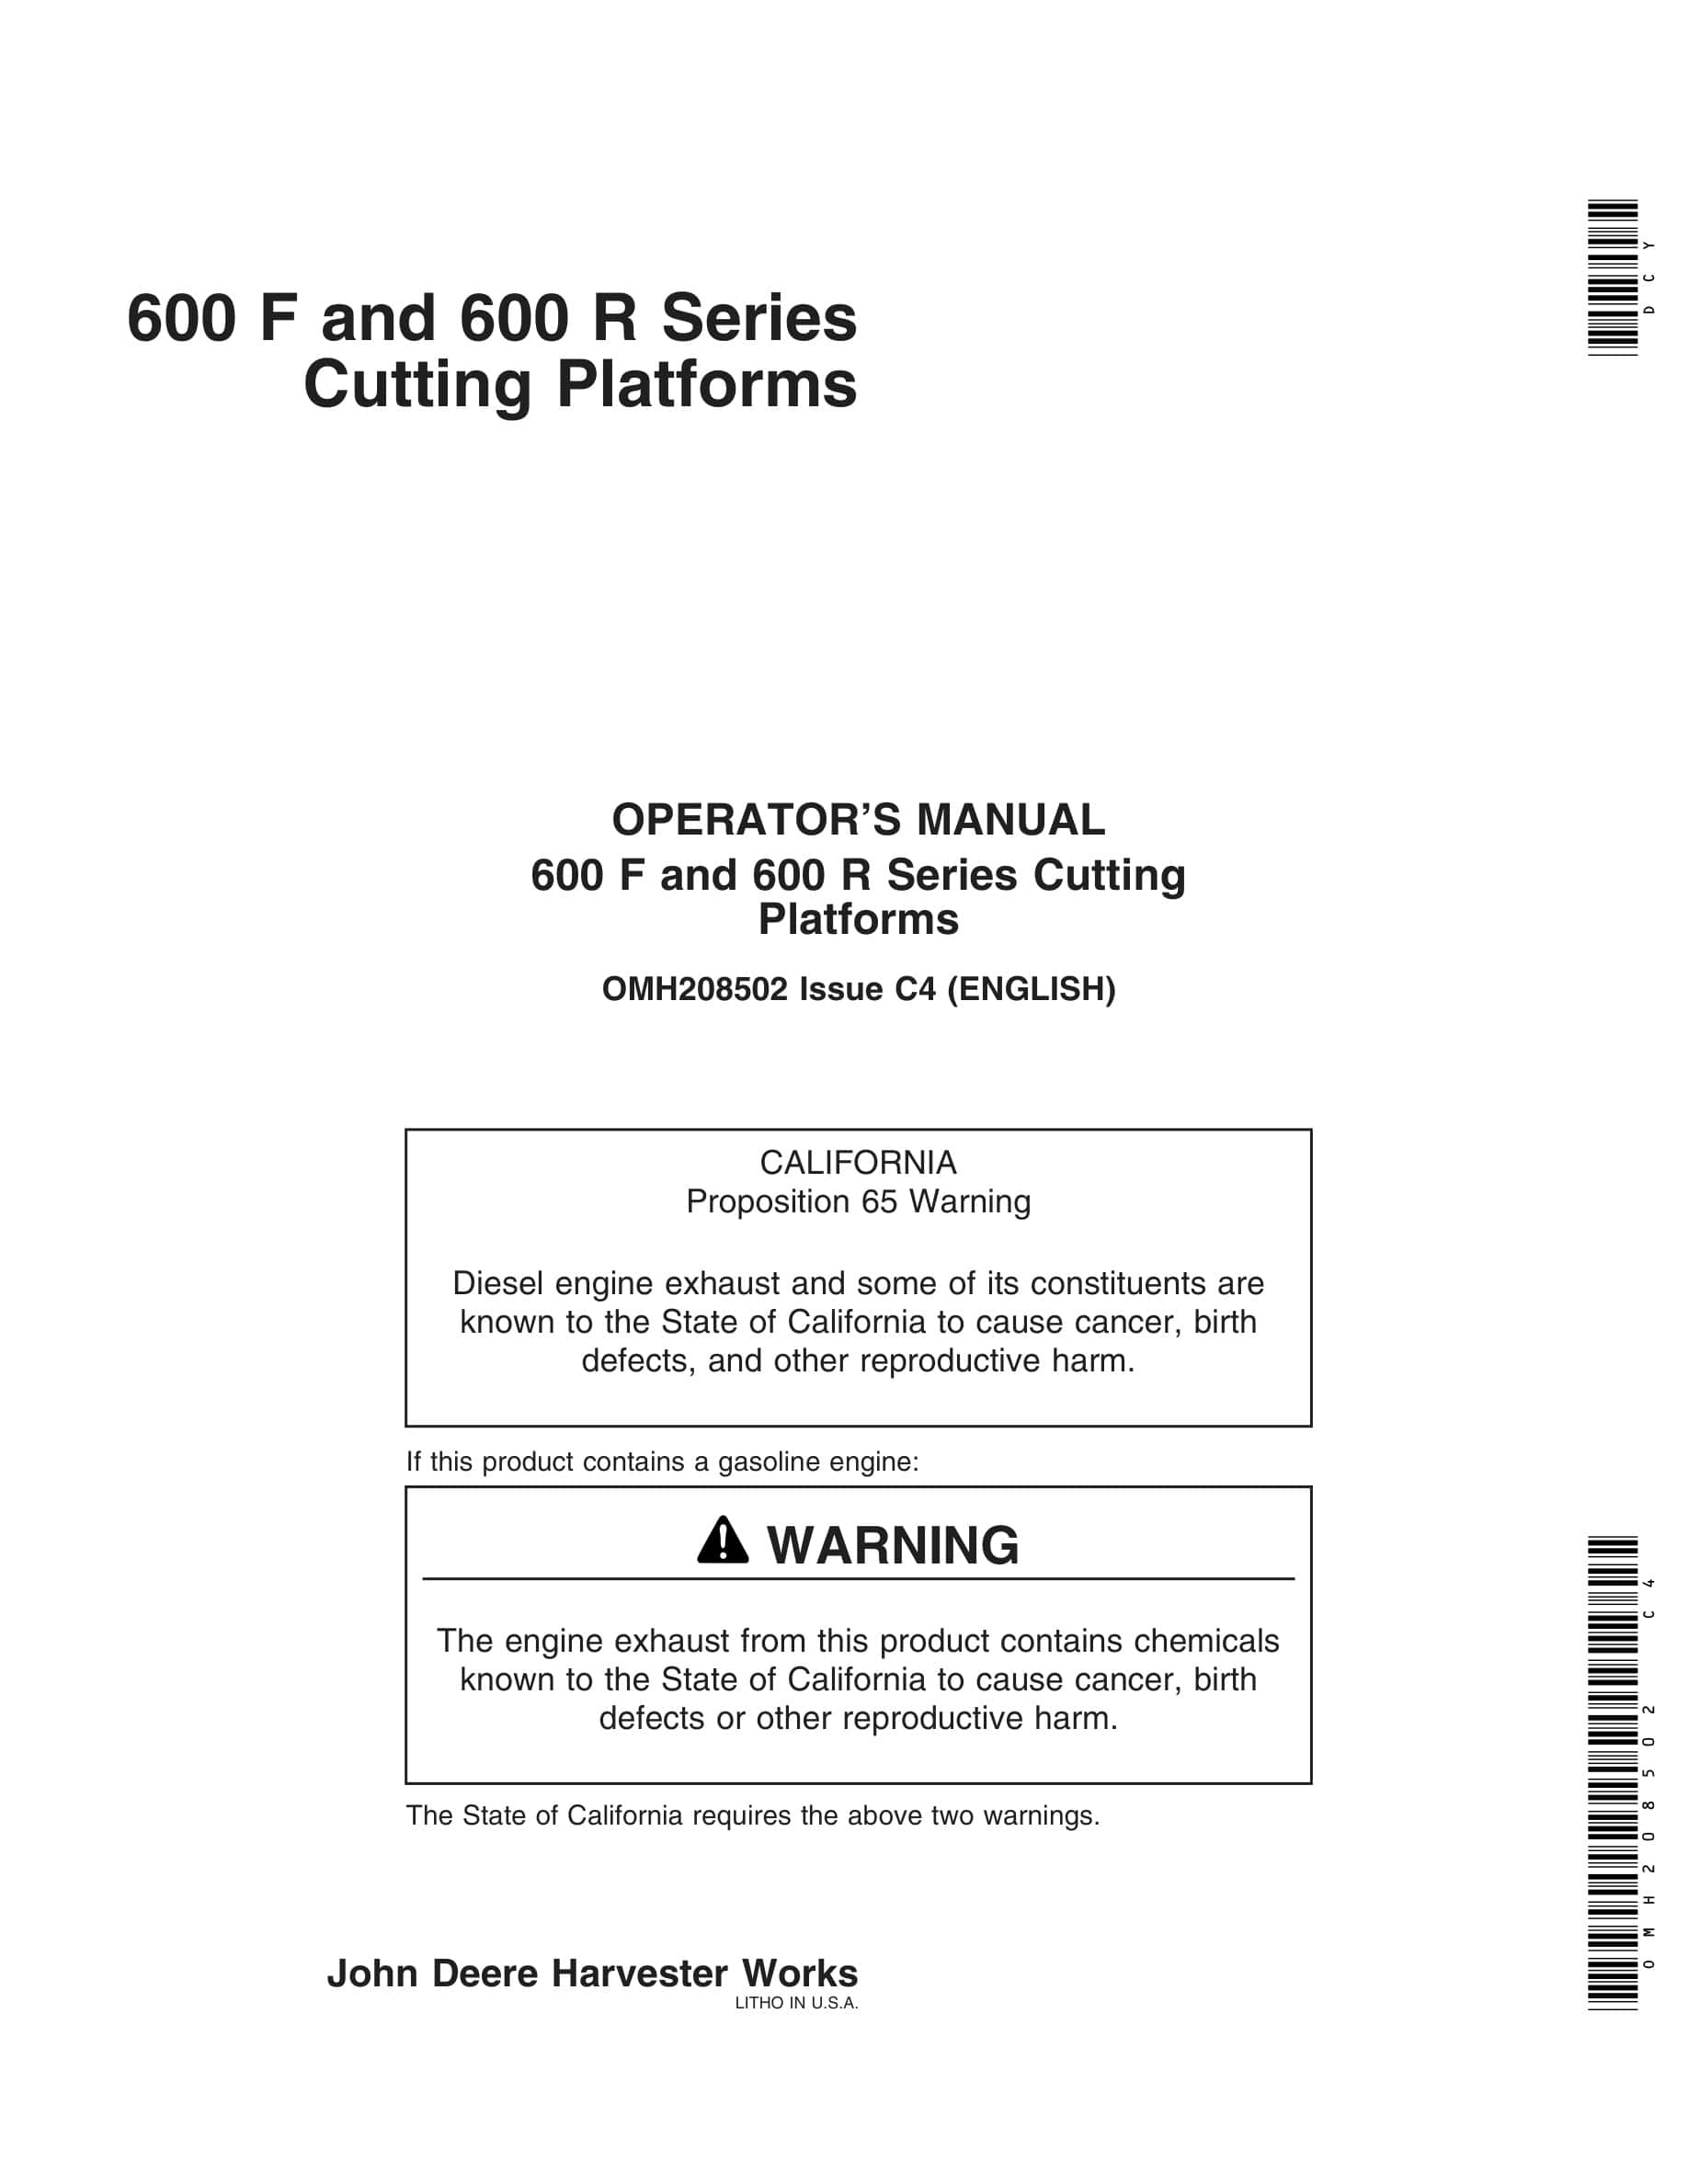 John Deere 600 F and 600 R Series Cutting Platforms Operator Manual OMH208502-1